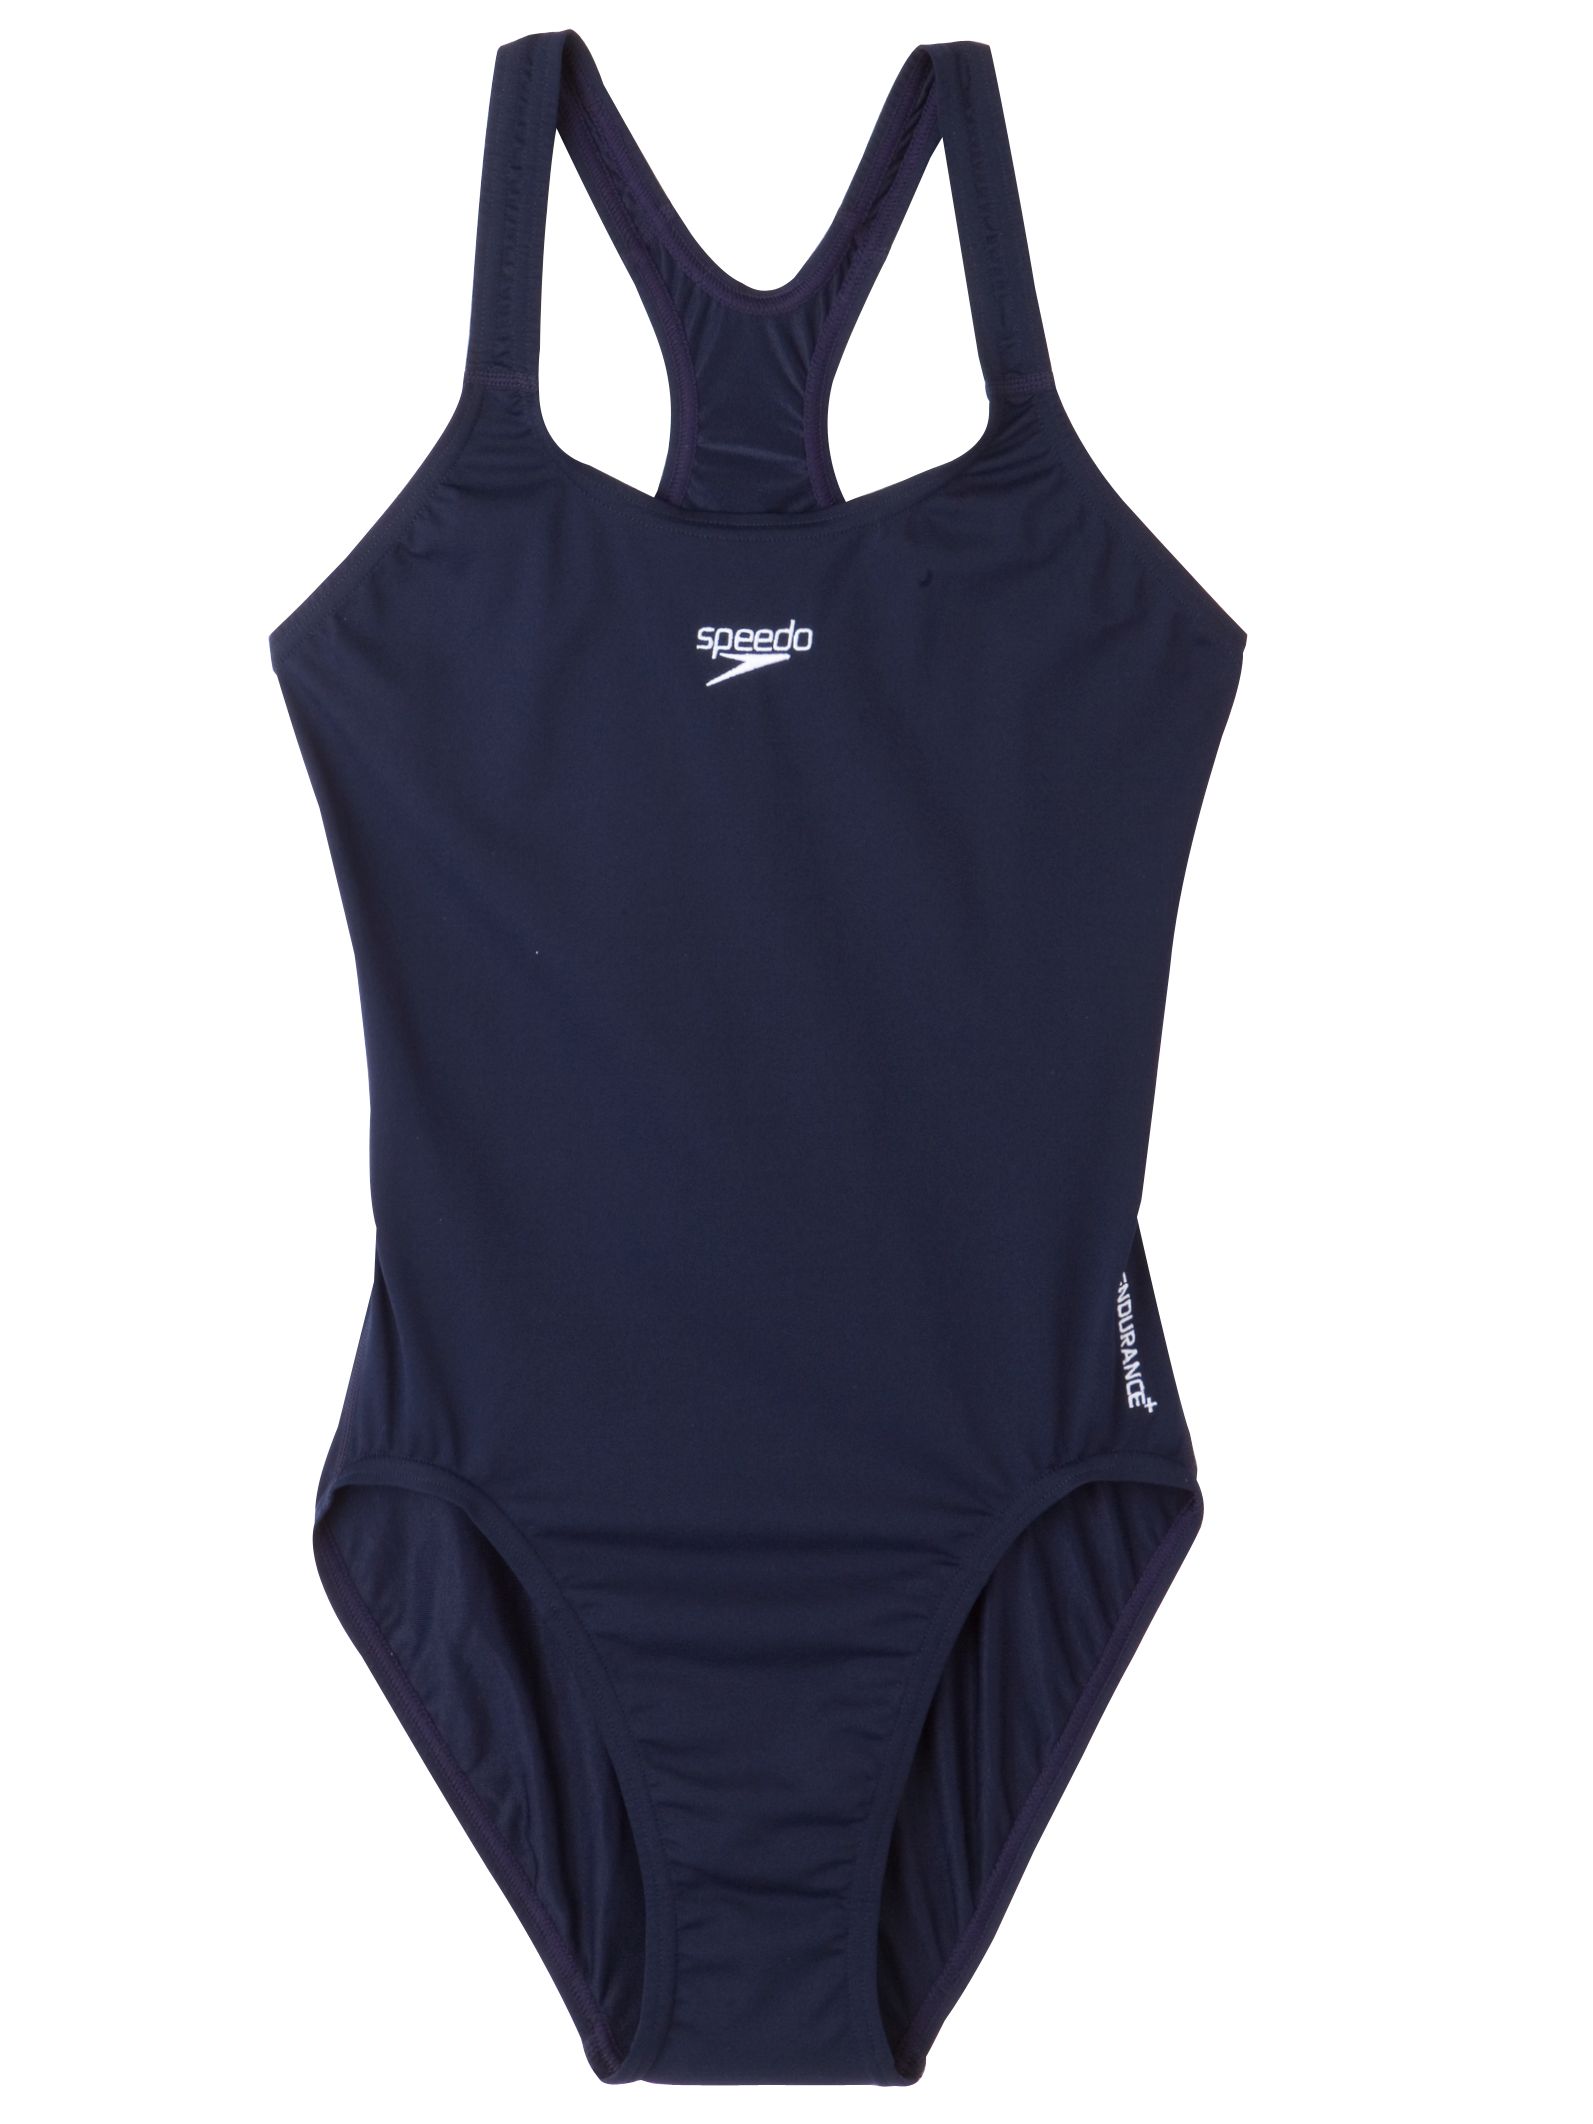 Speedo Endurance  Medalist Swimsuit, Navy, Size 36